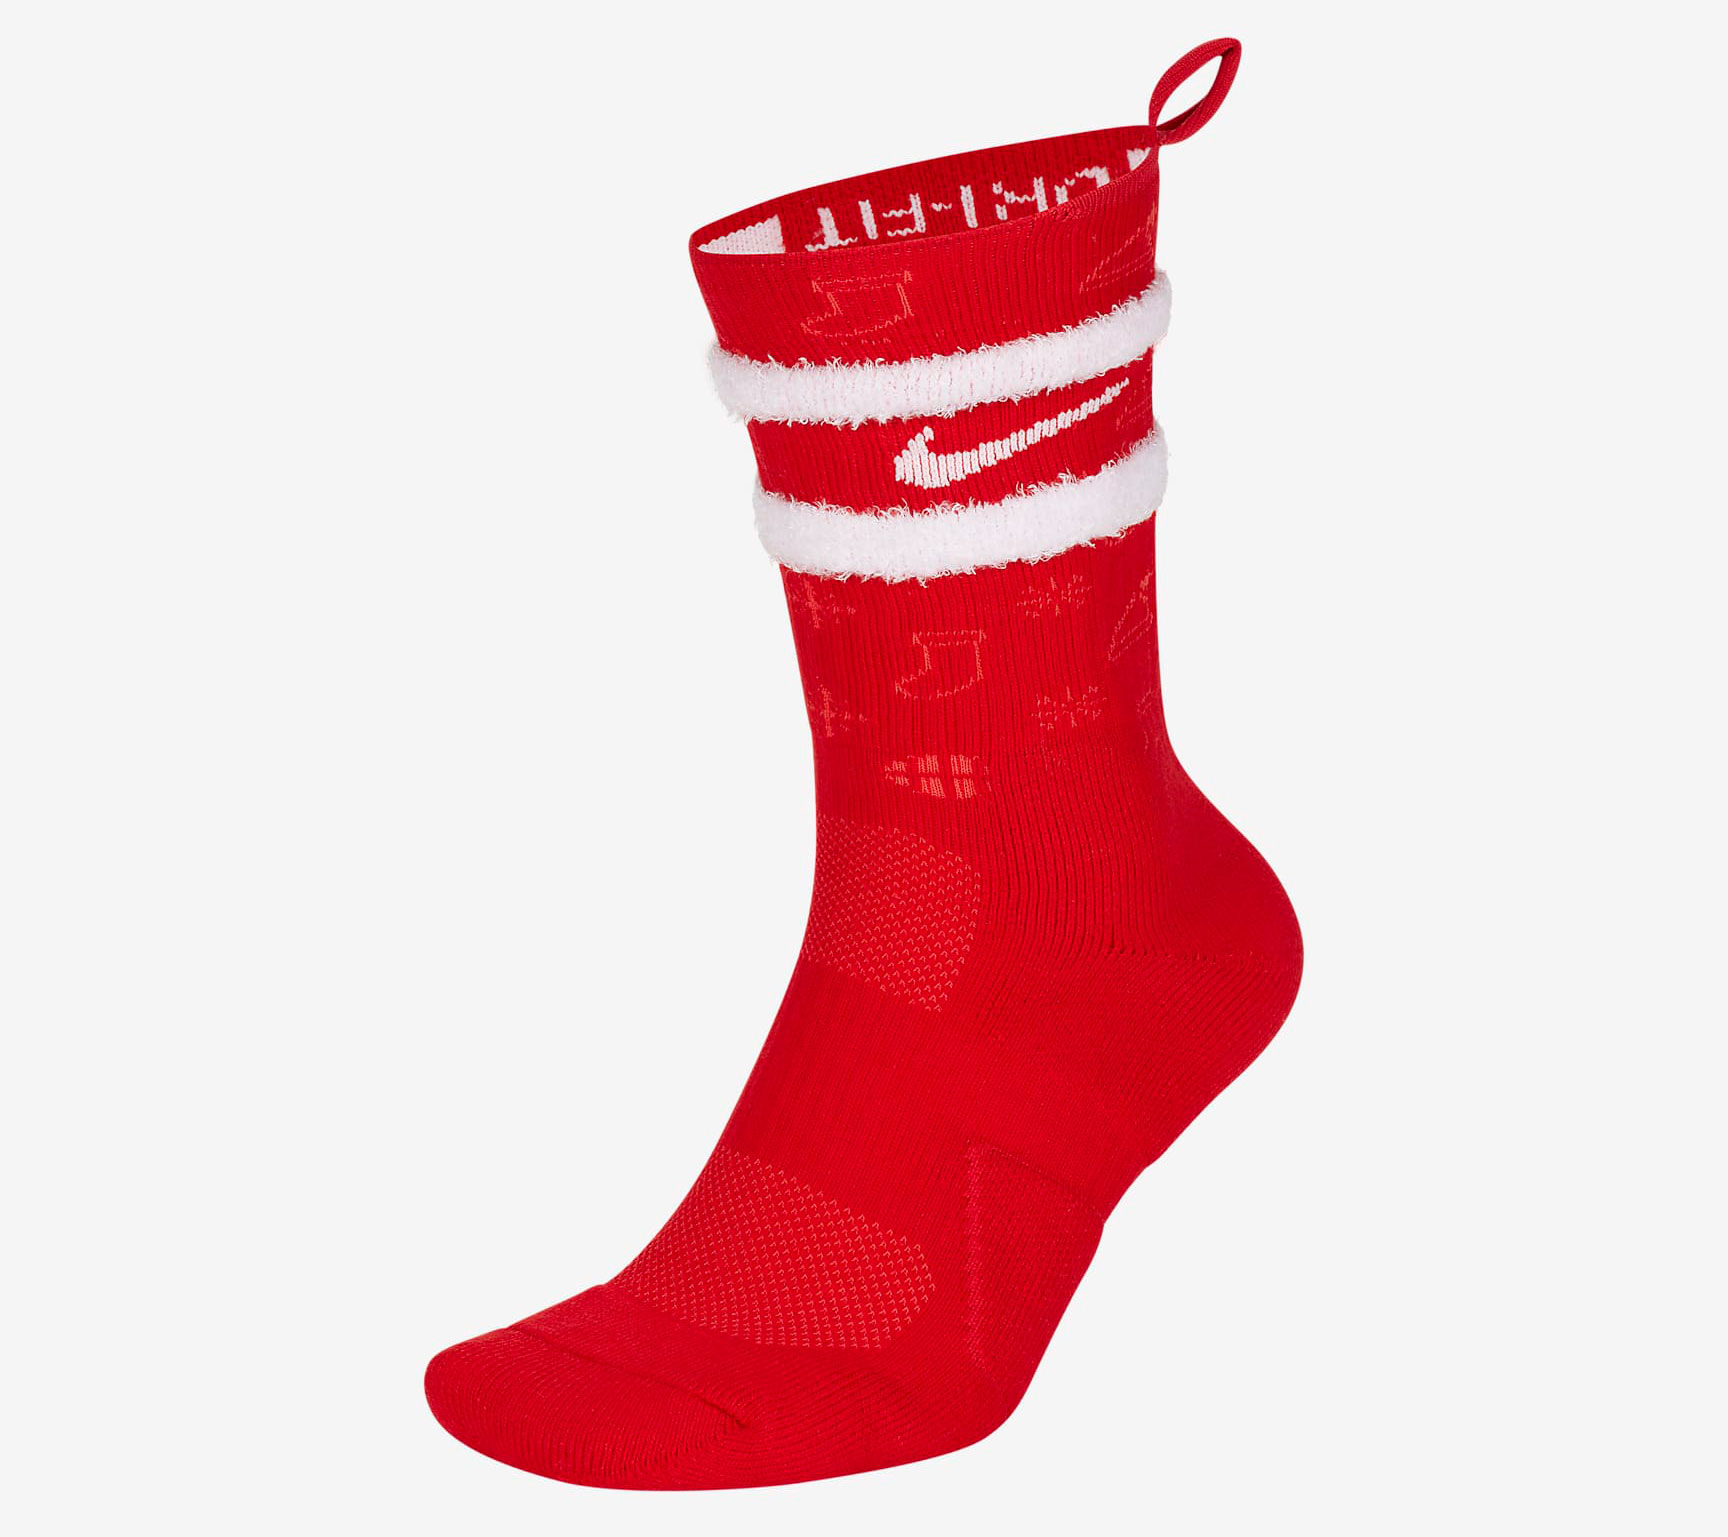 nike-elite-crew-christmas-socks-red